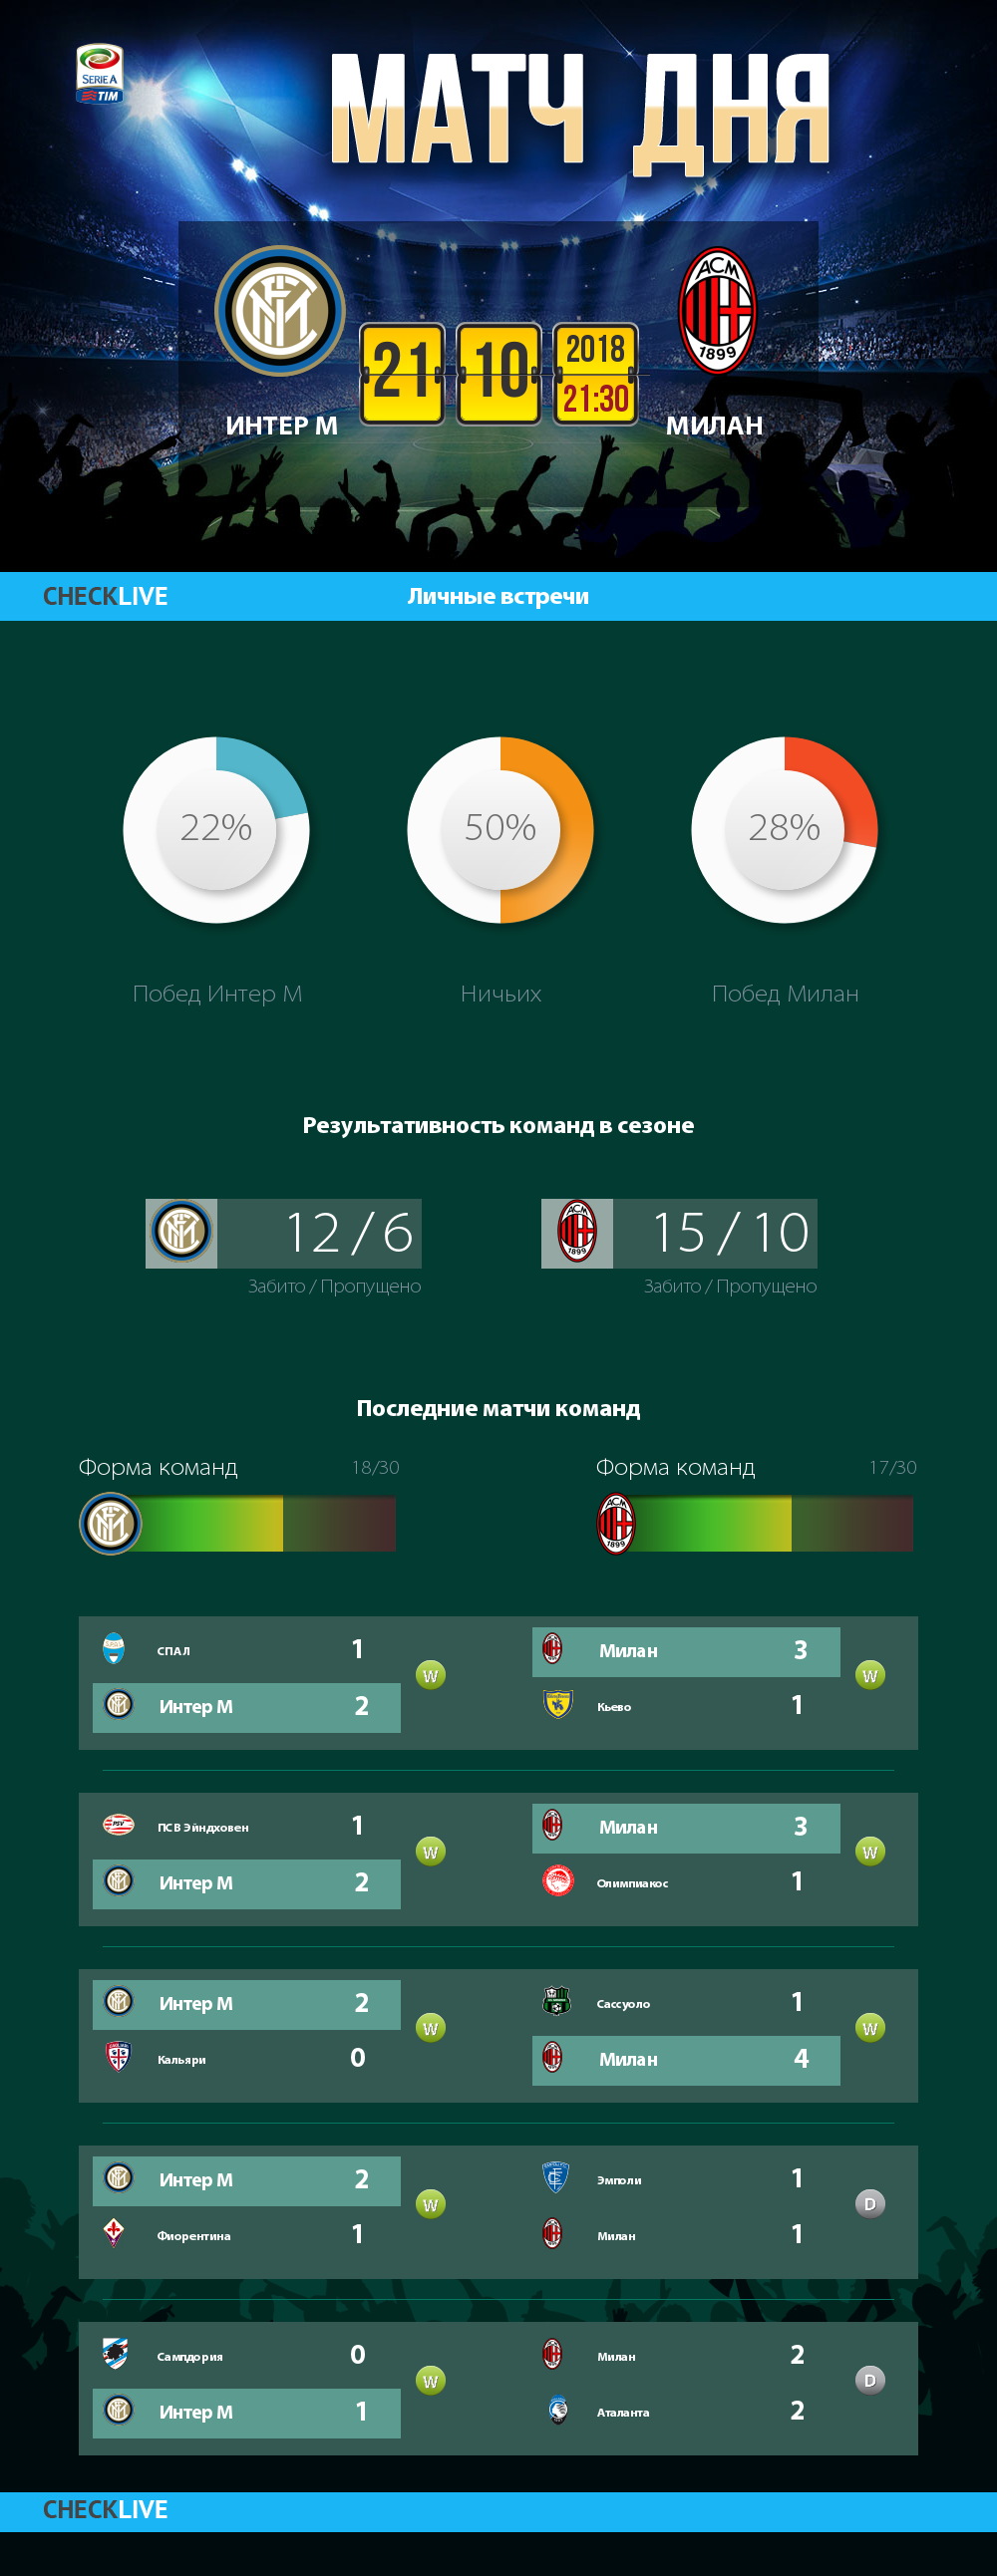 Инфографика Интер М и Милан матч дня 21.10.2018